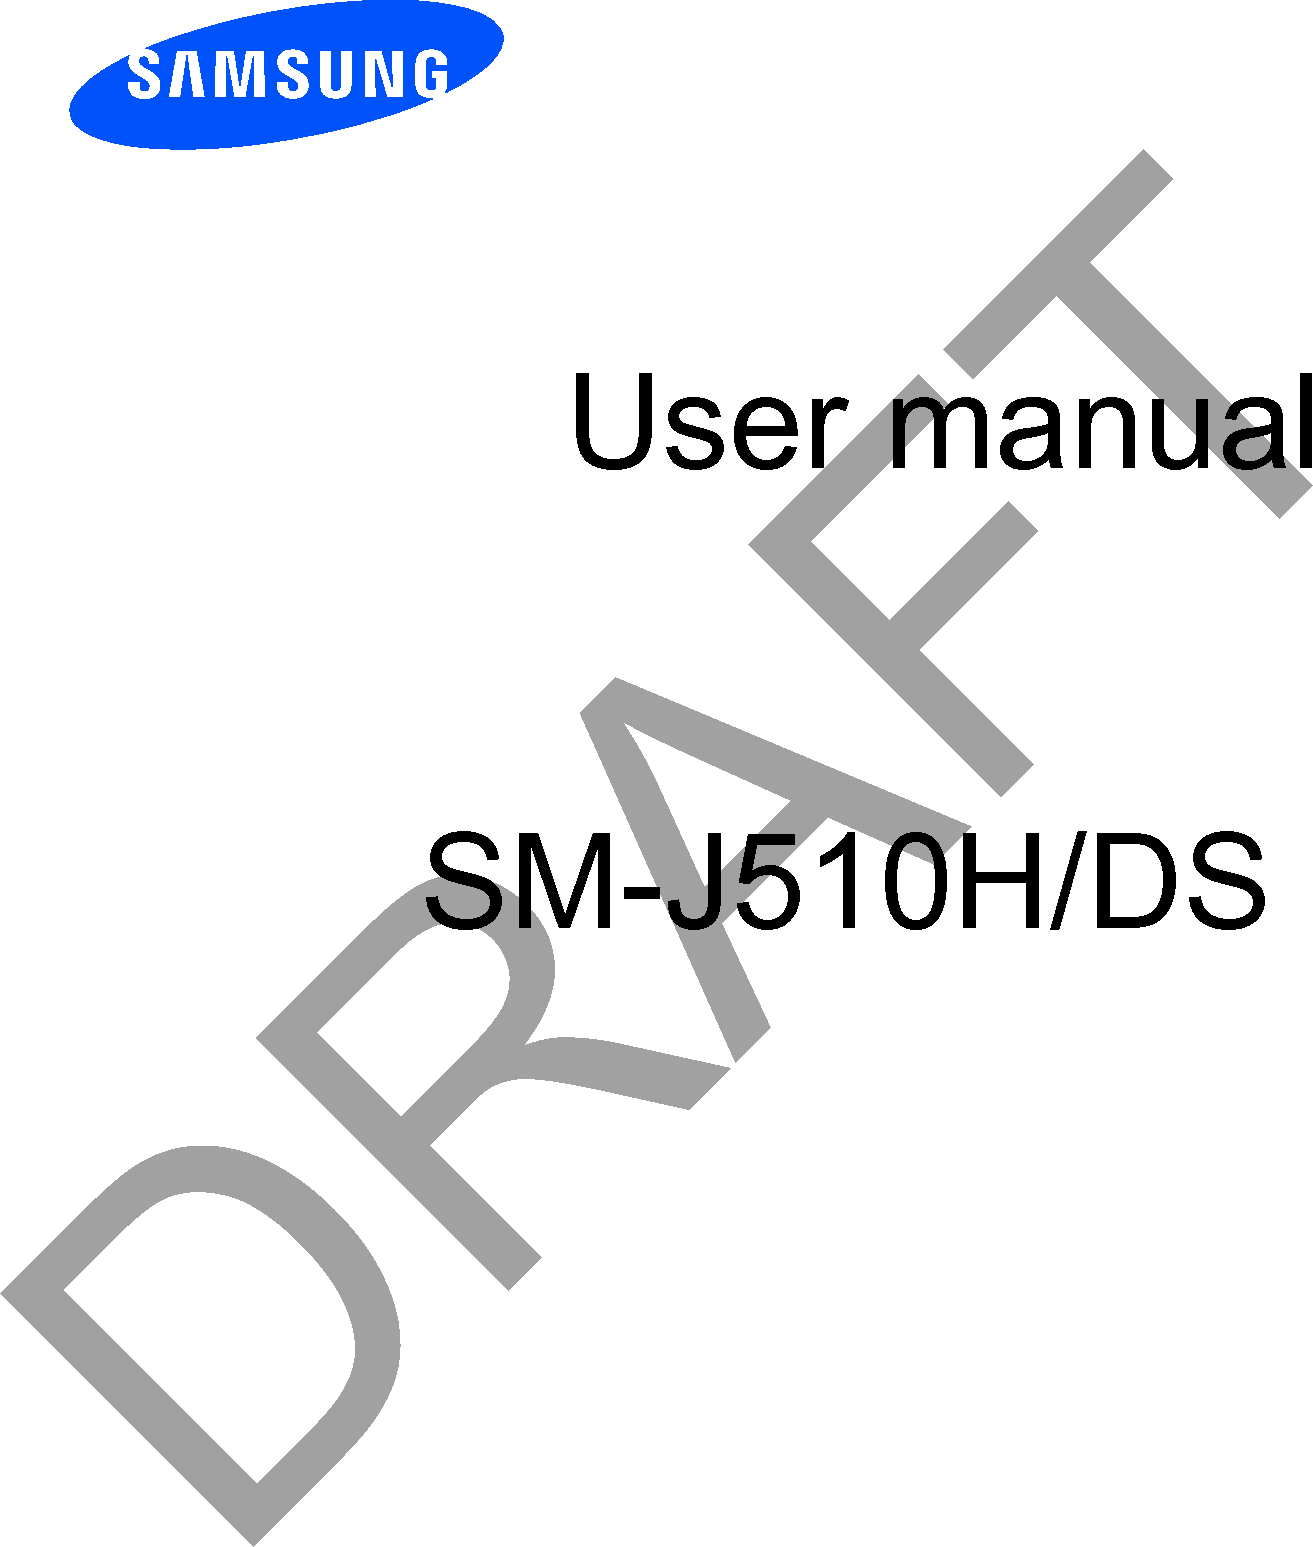 User manualSM-J510H/DSDRAFT